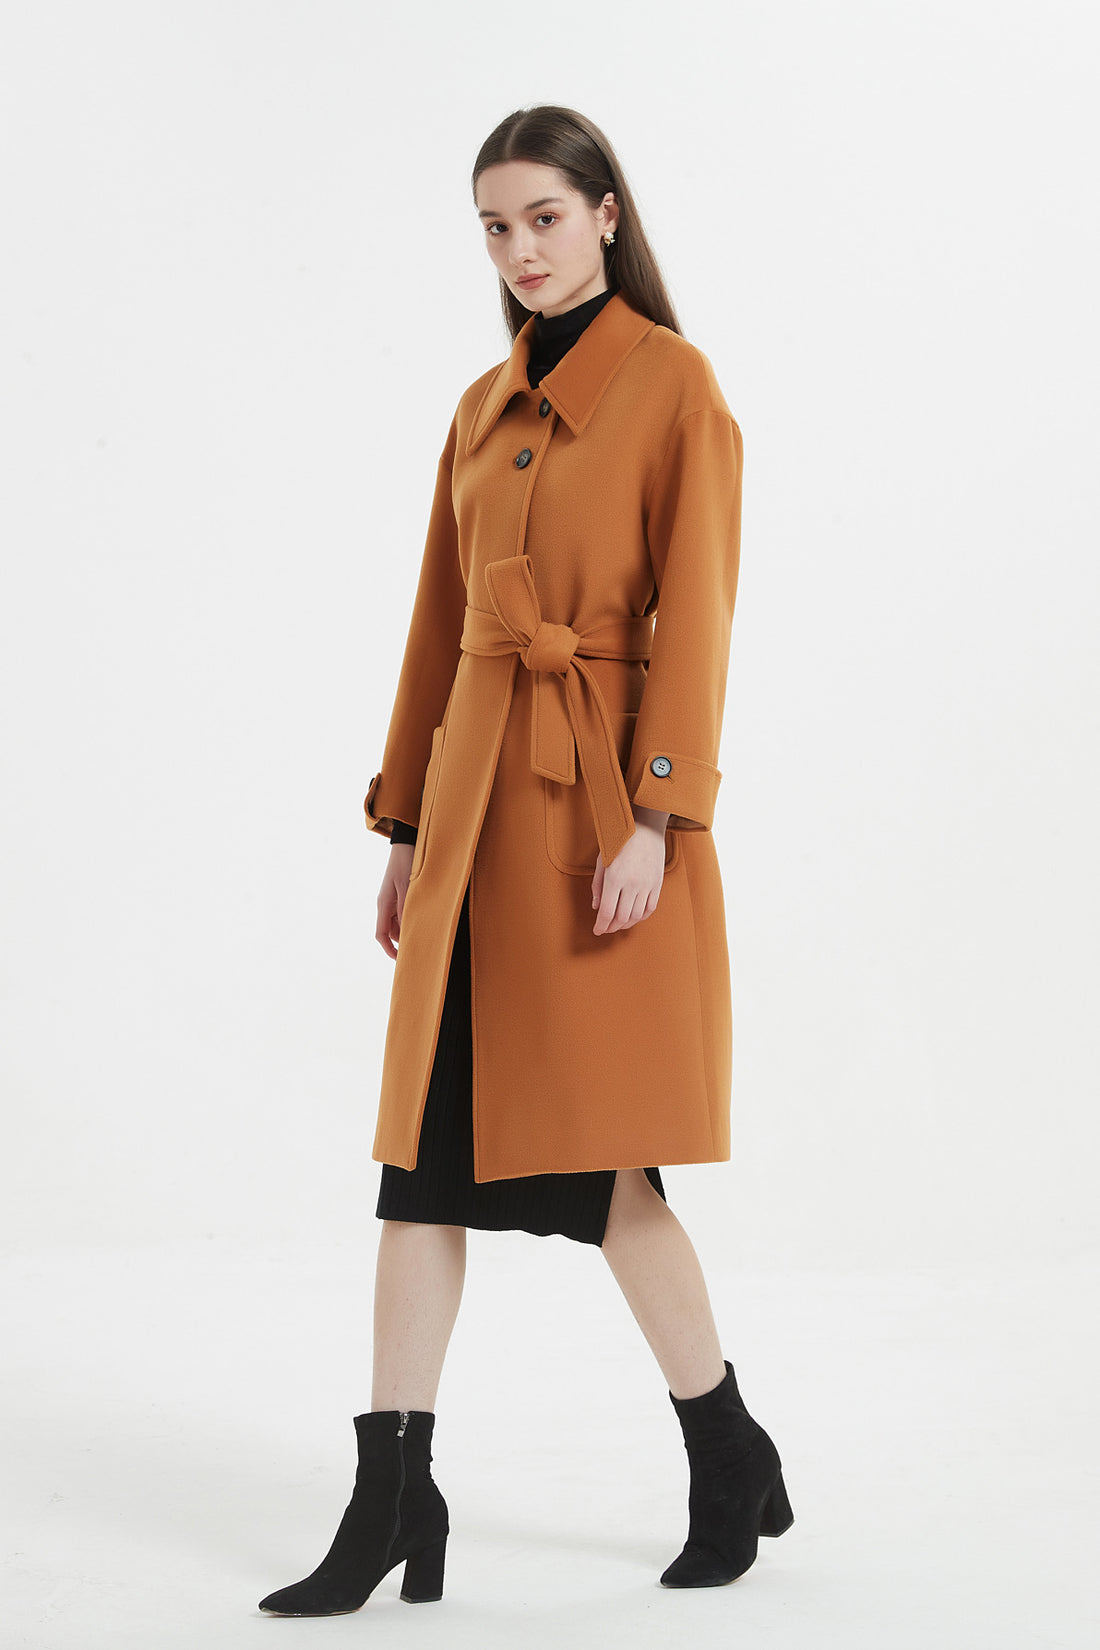 SKYE Shop Chic Modern Elegant Timeless Women Clothing French Parisian Minimalist Annabelle Long Wool Coat 7